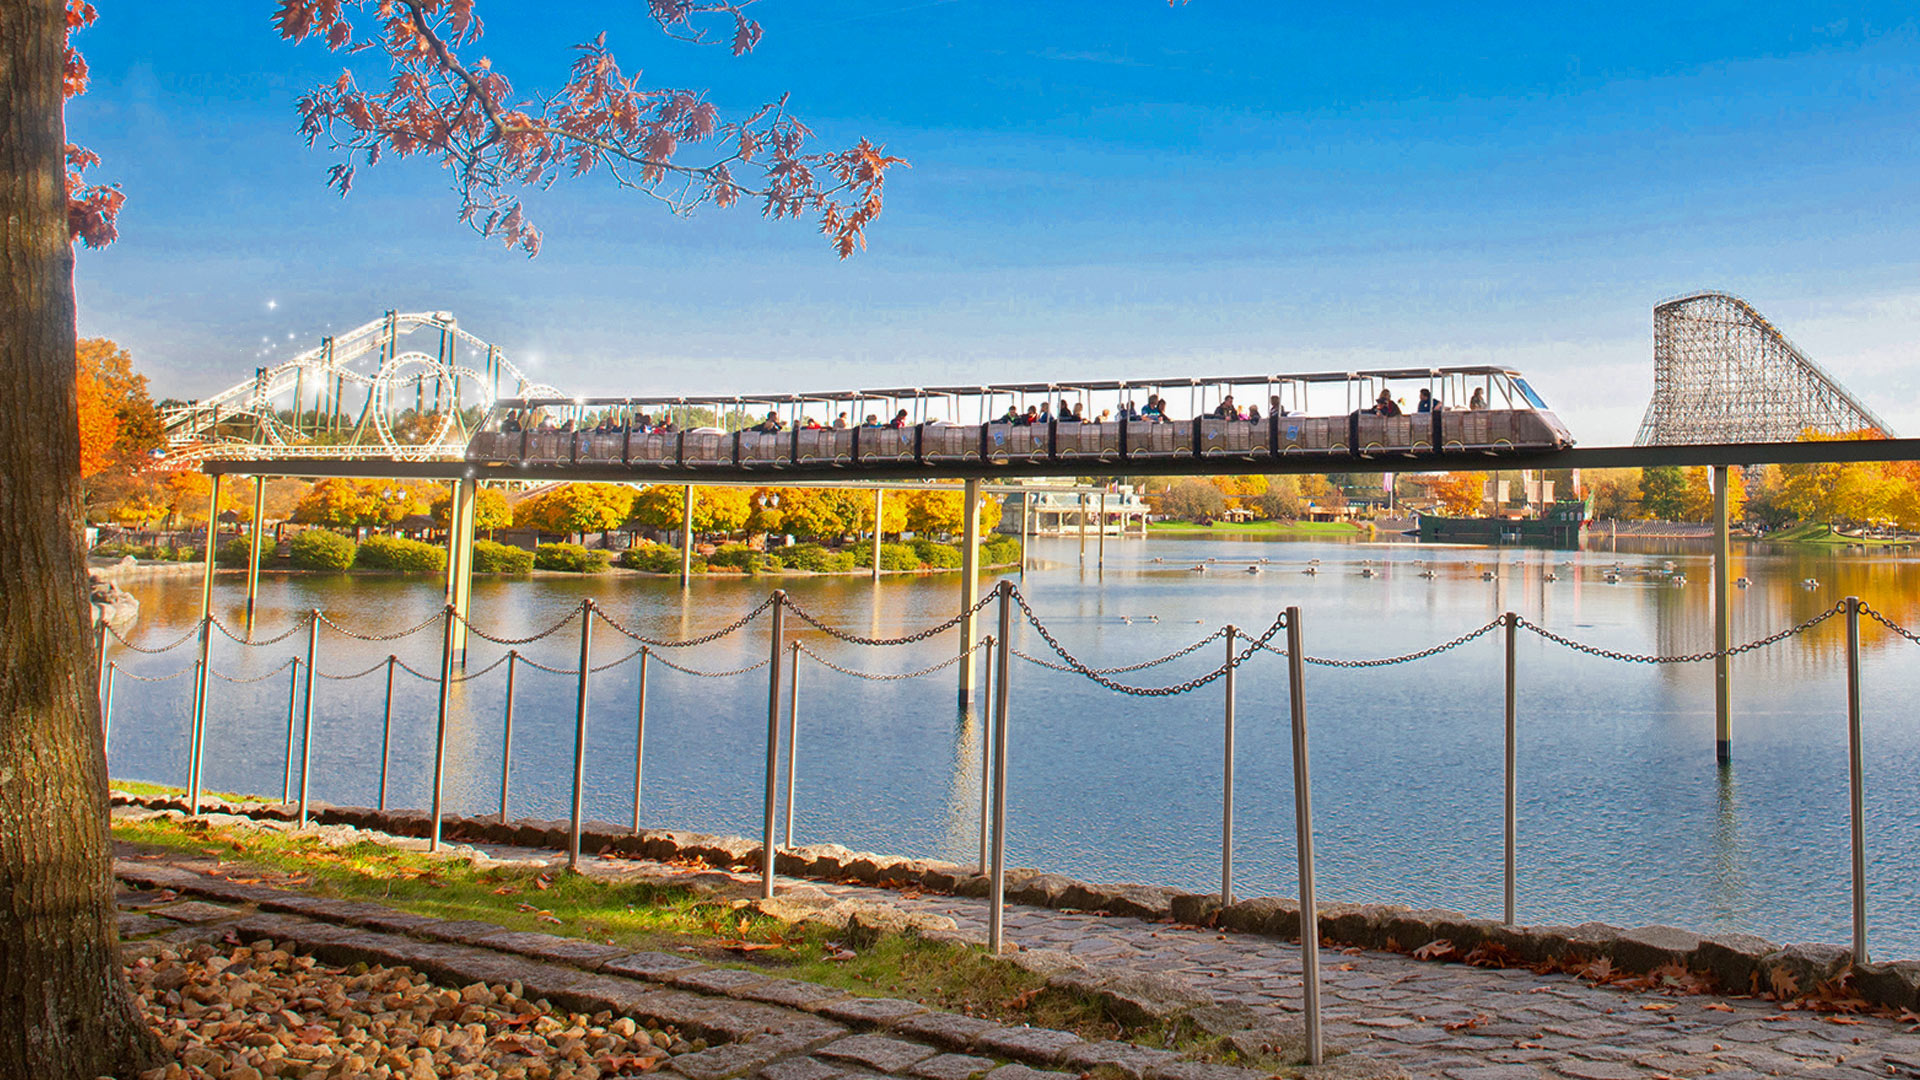 Heide Park Resort: Monorail